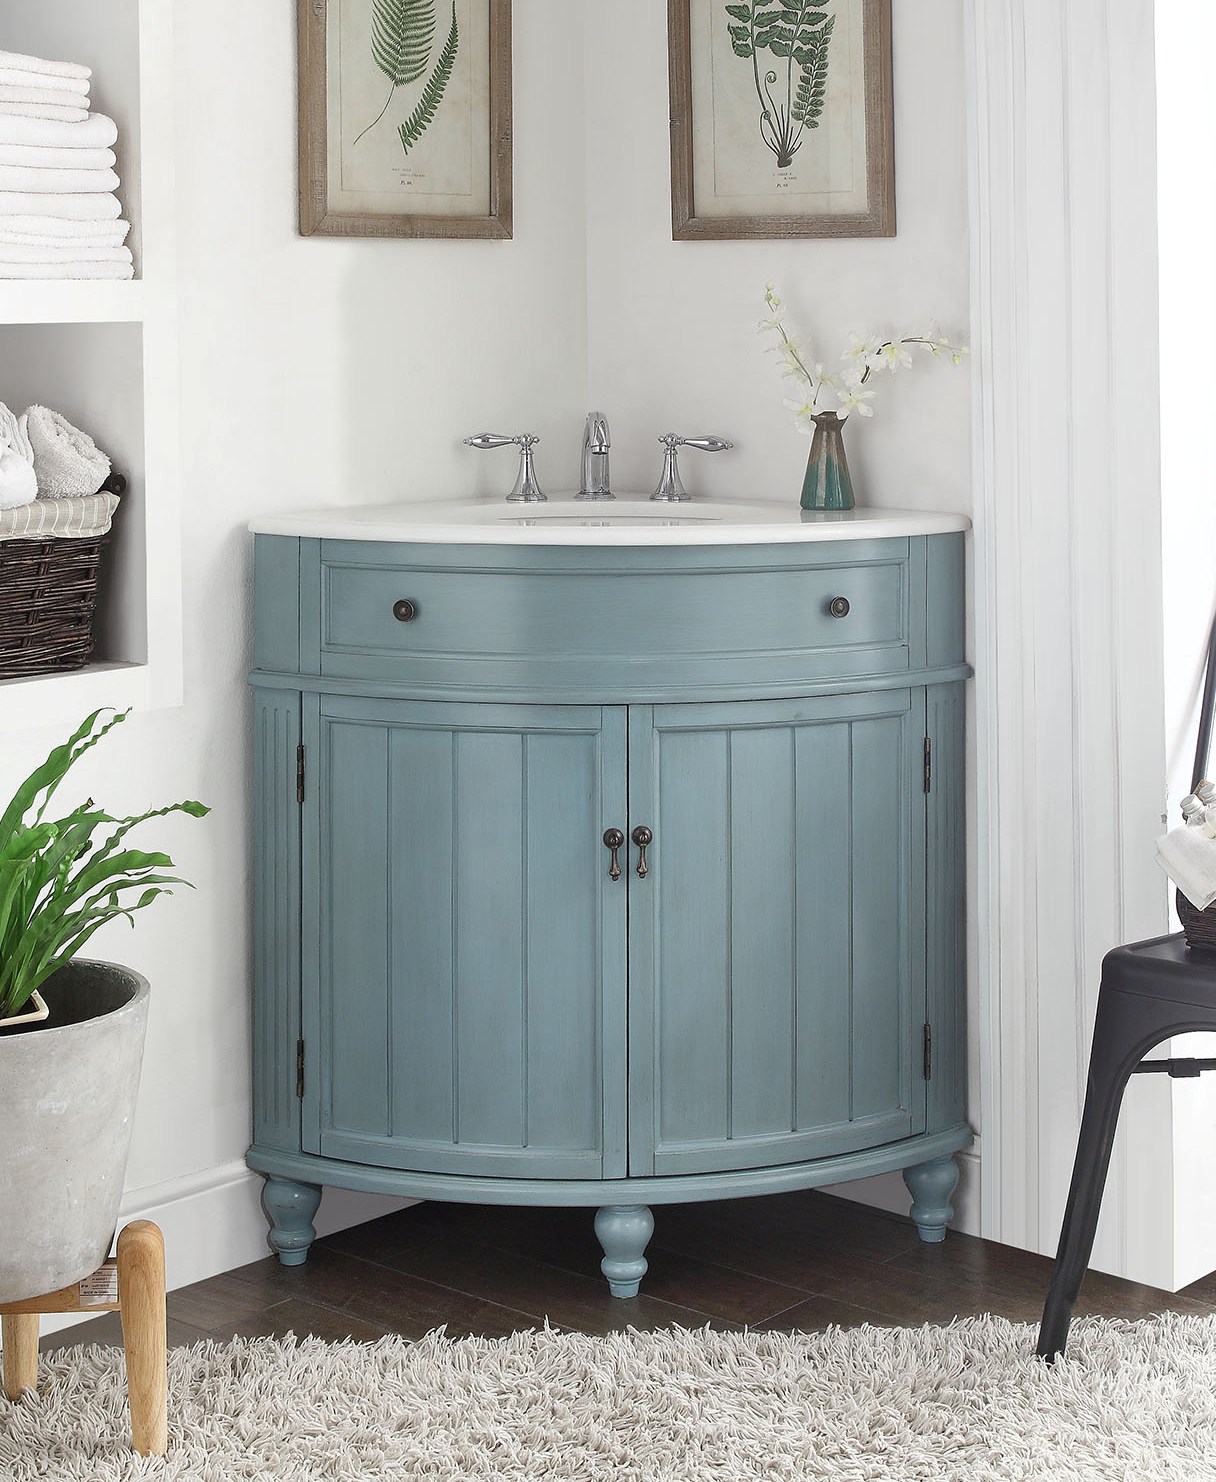 https://www.listvanities.com/images/D/Adelina-24-inch-Corner-Antique-Bathroom-Vanity-Light-Blue-Finish.jpg